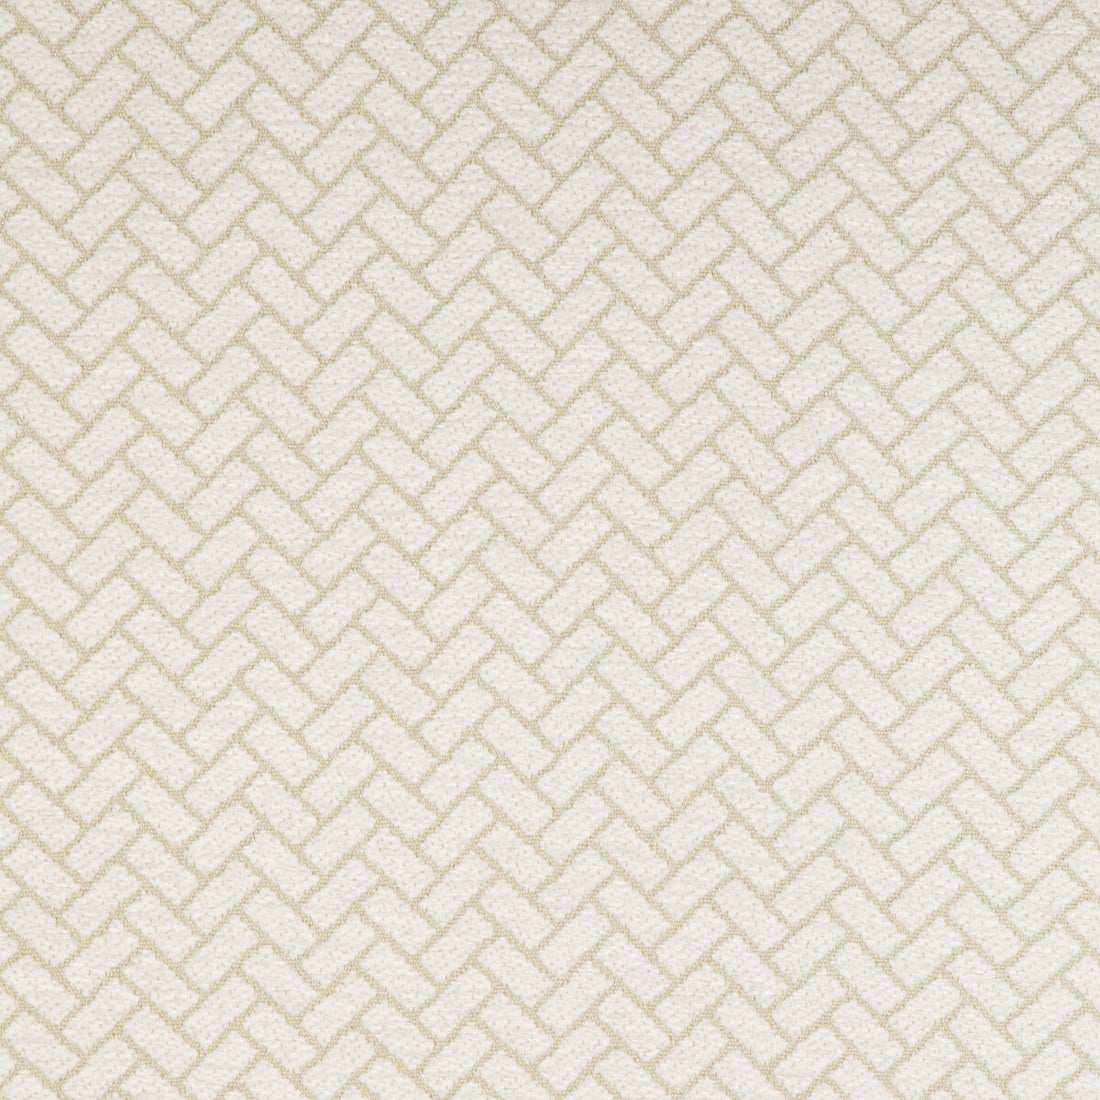 Kravet Smart fabric in 37003-1 color - pattern 37003.1.0 - by Kravet Smart in the Pavilion collection